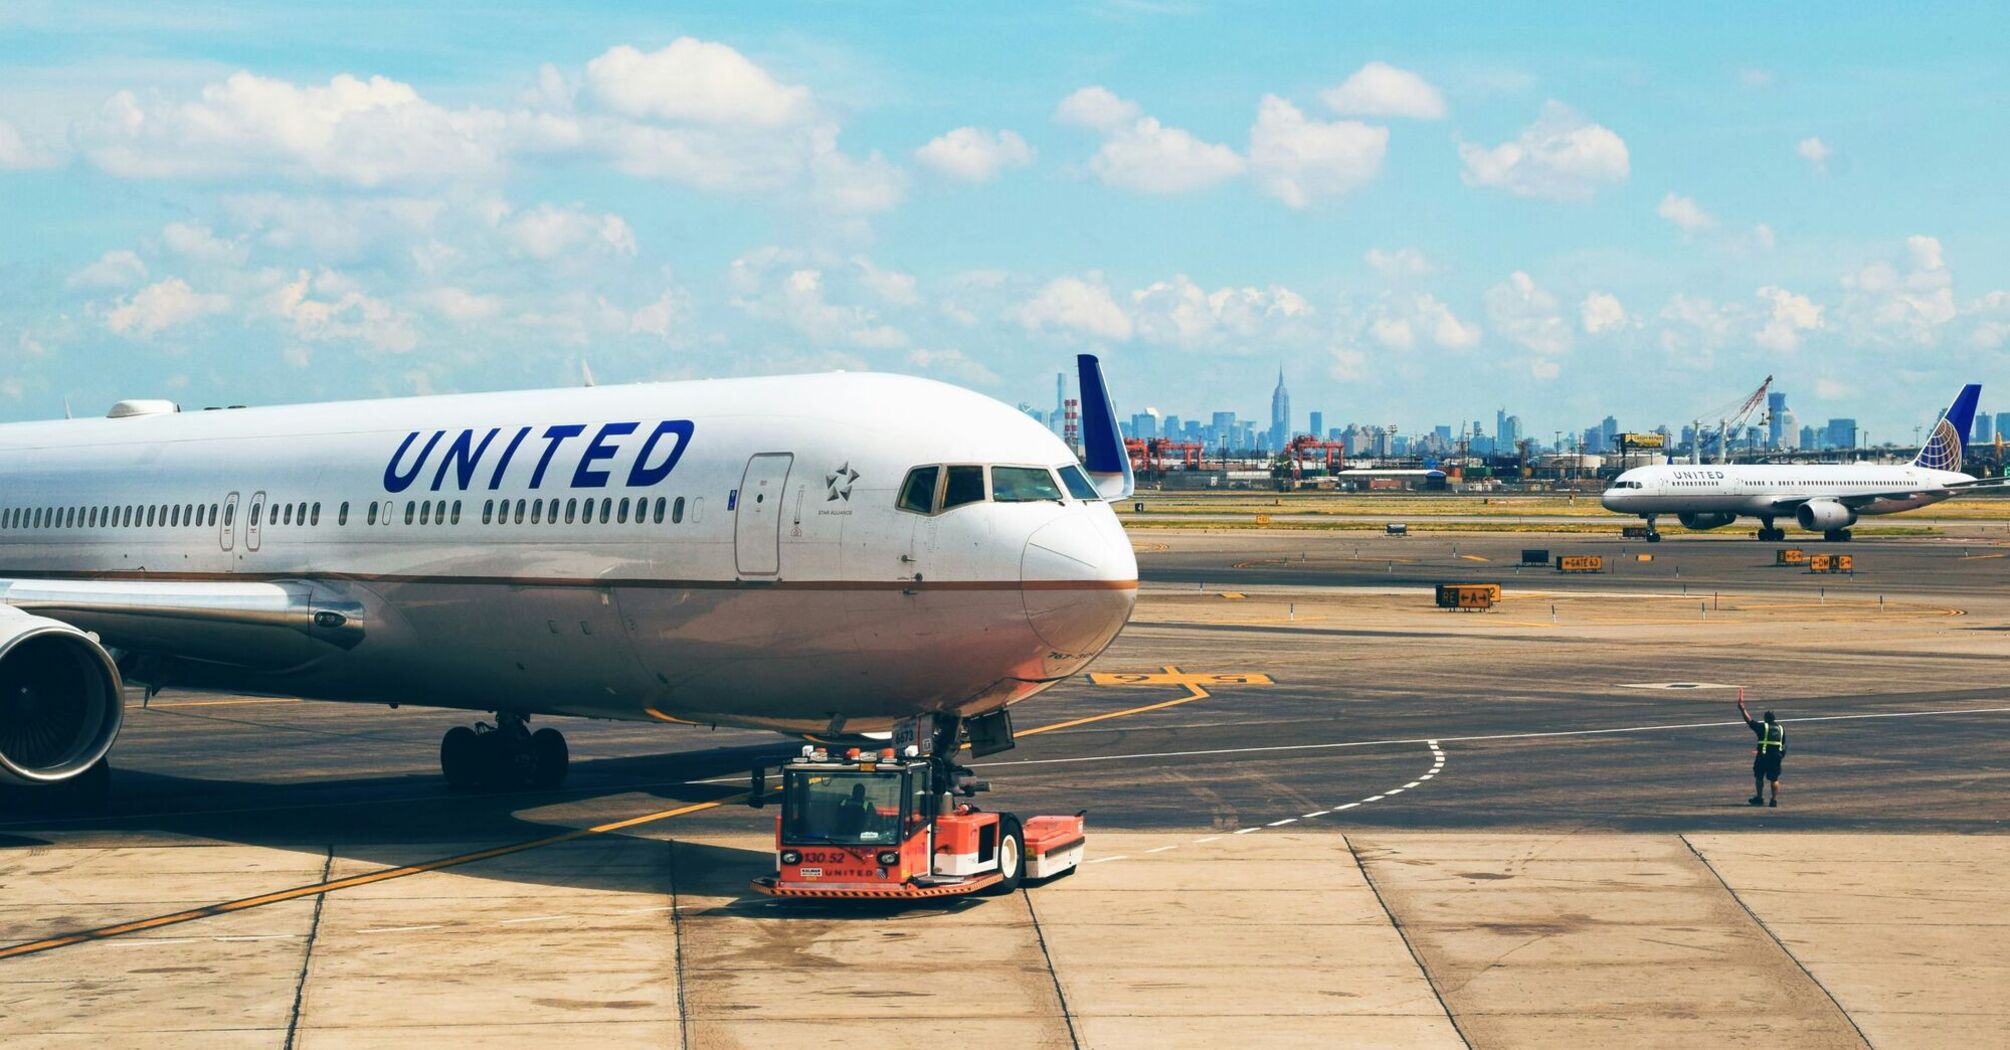 White United Airlines plane on park